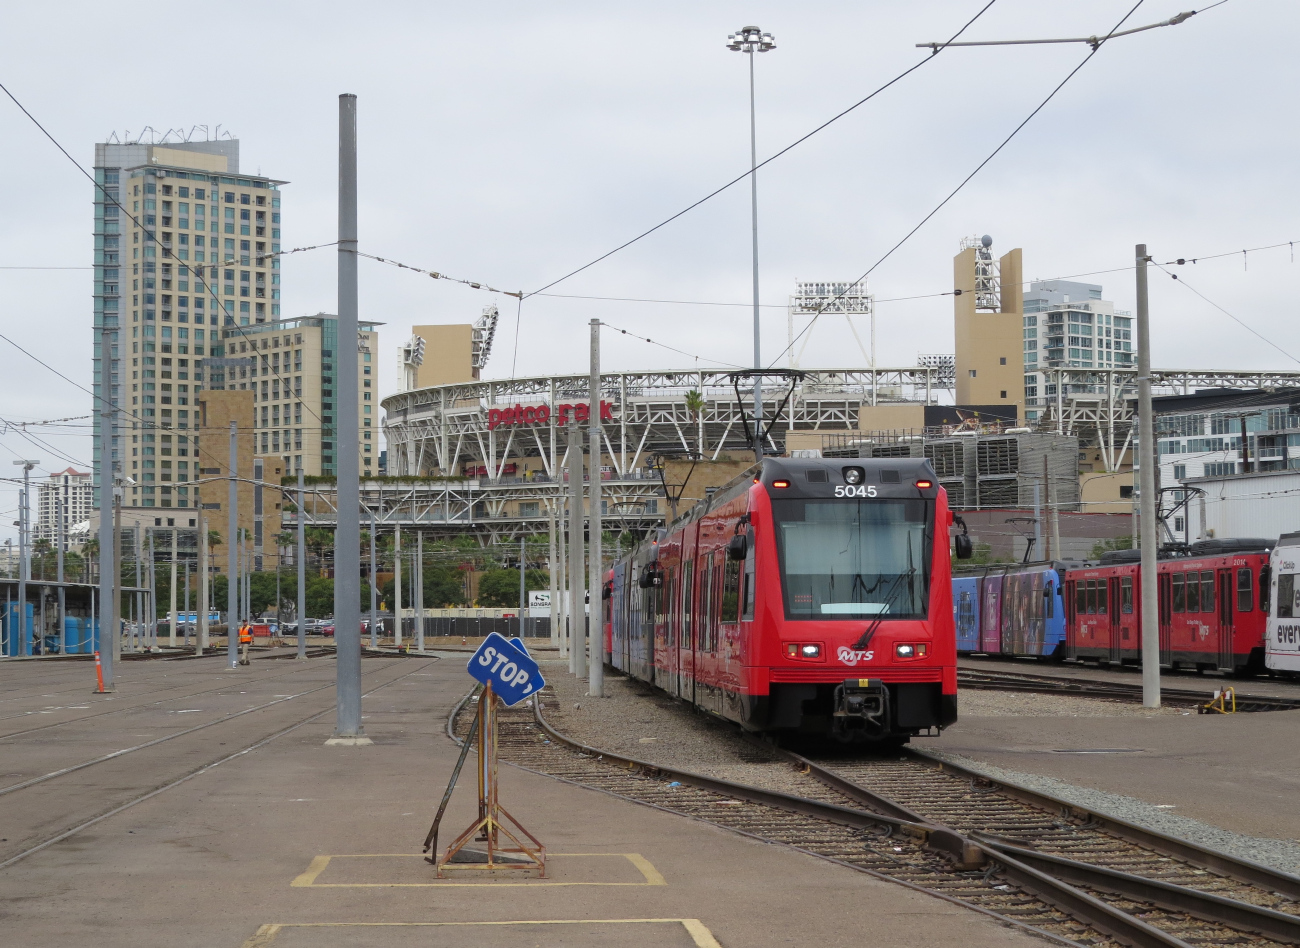 Сан-Диего, Siemens SD100 № 2014; Сан-Диего, Siemens S700 LRV № 5045; Сан-Диего — San Diego Trolley депо